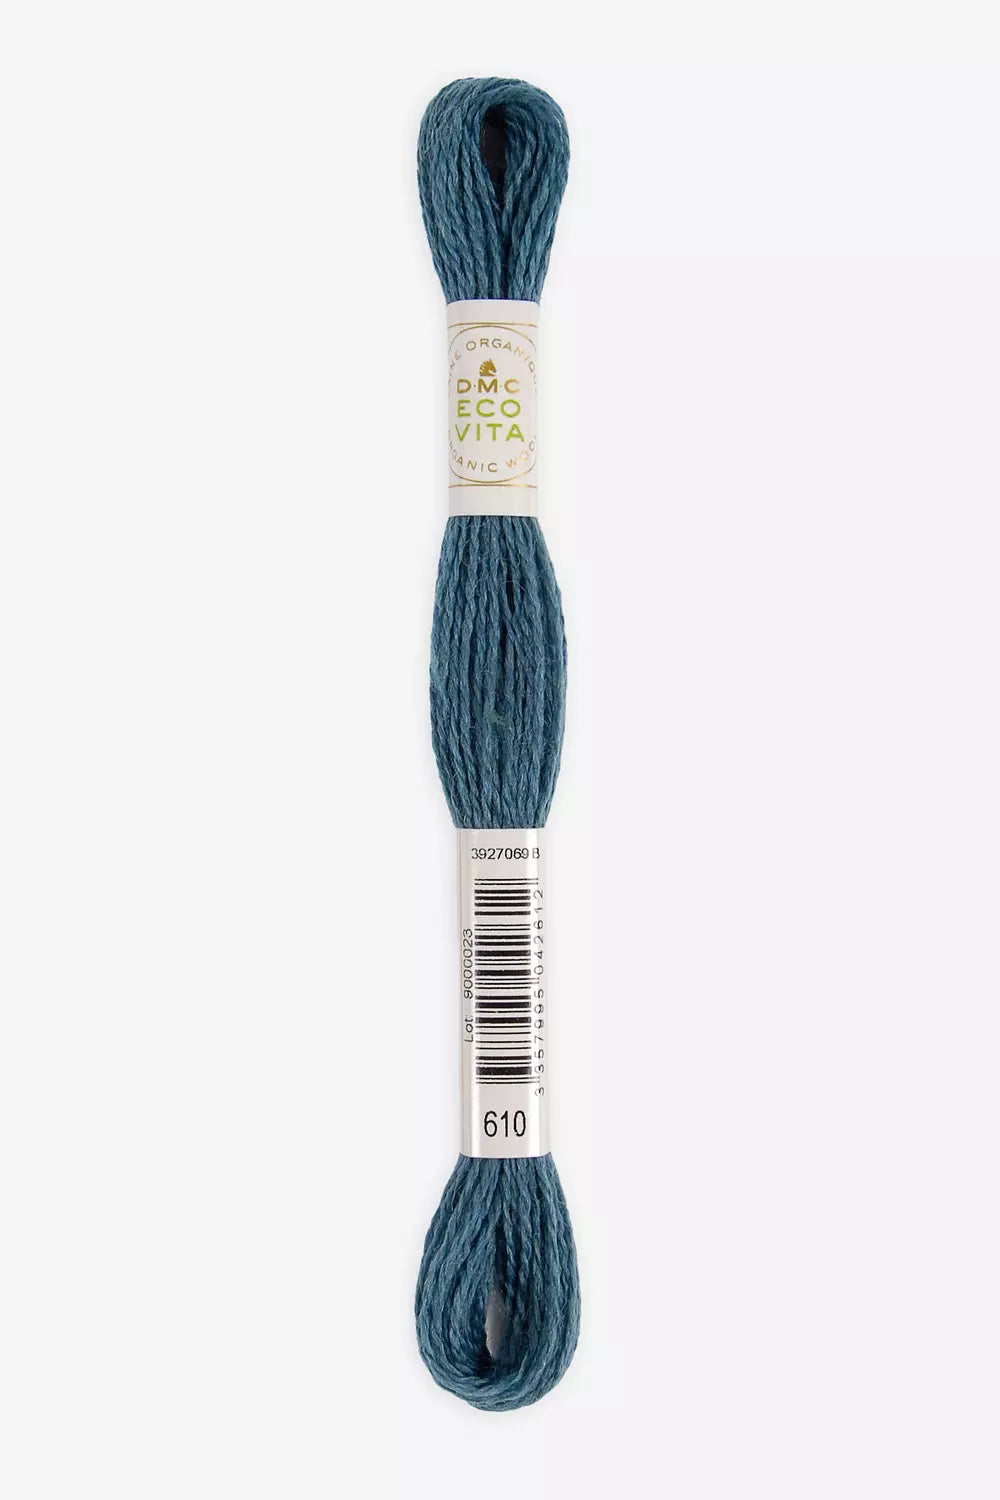 
                  
                    DMC Eco Vita Organic Wool Thread E-360 610
                  
                